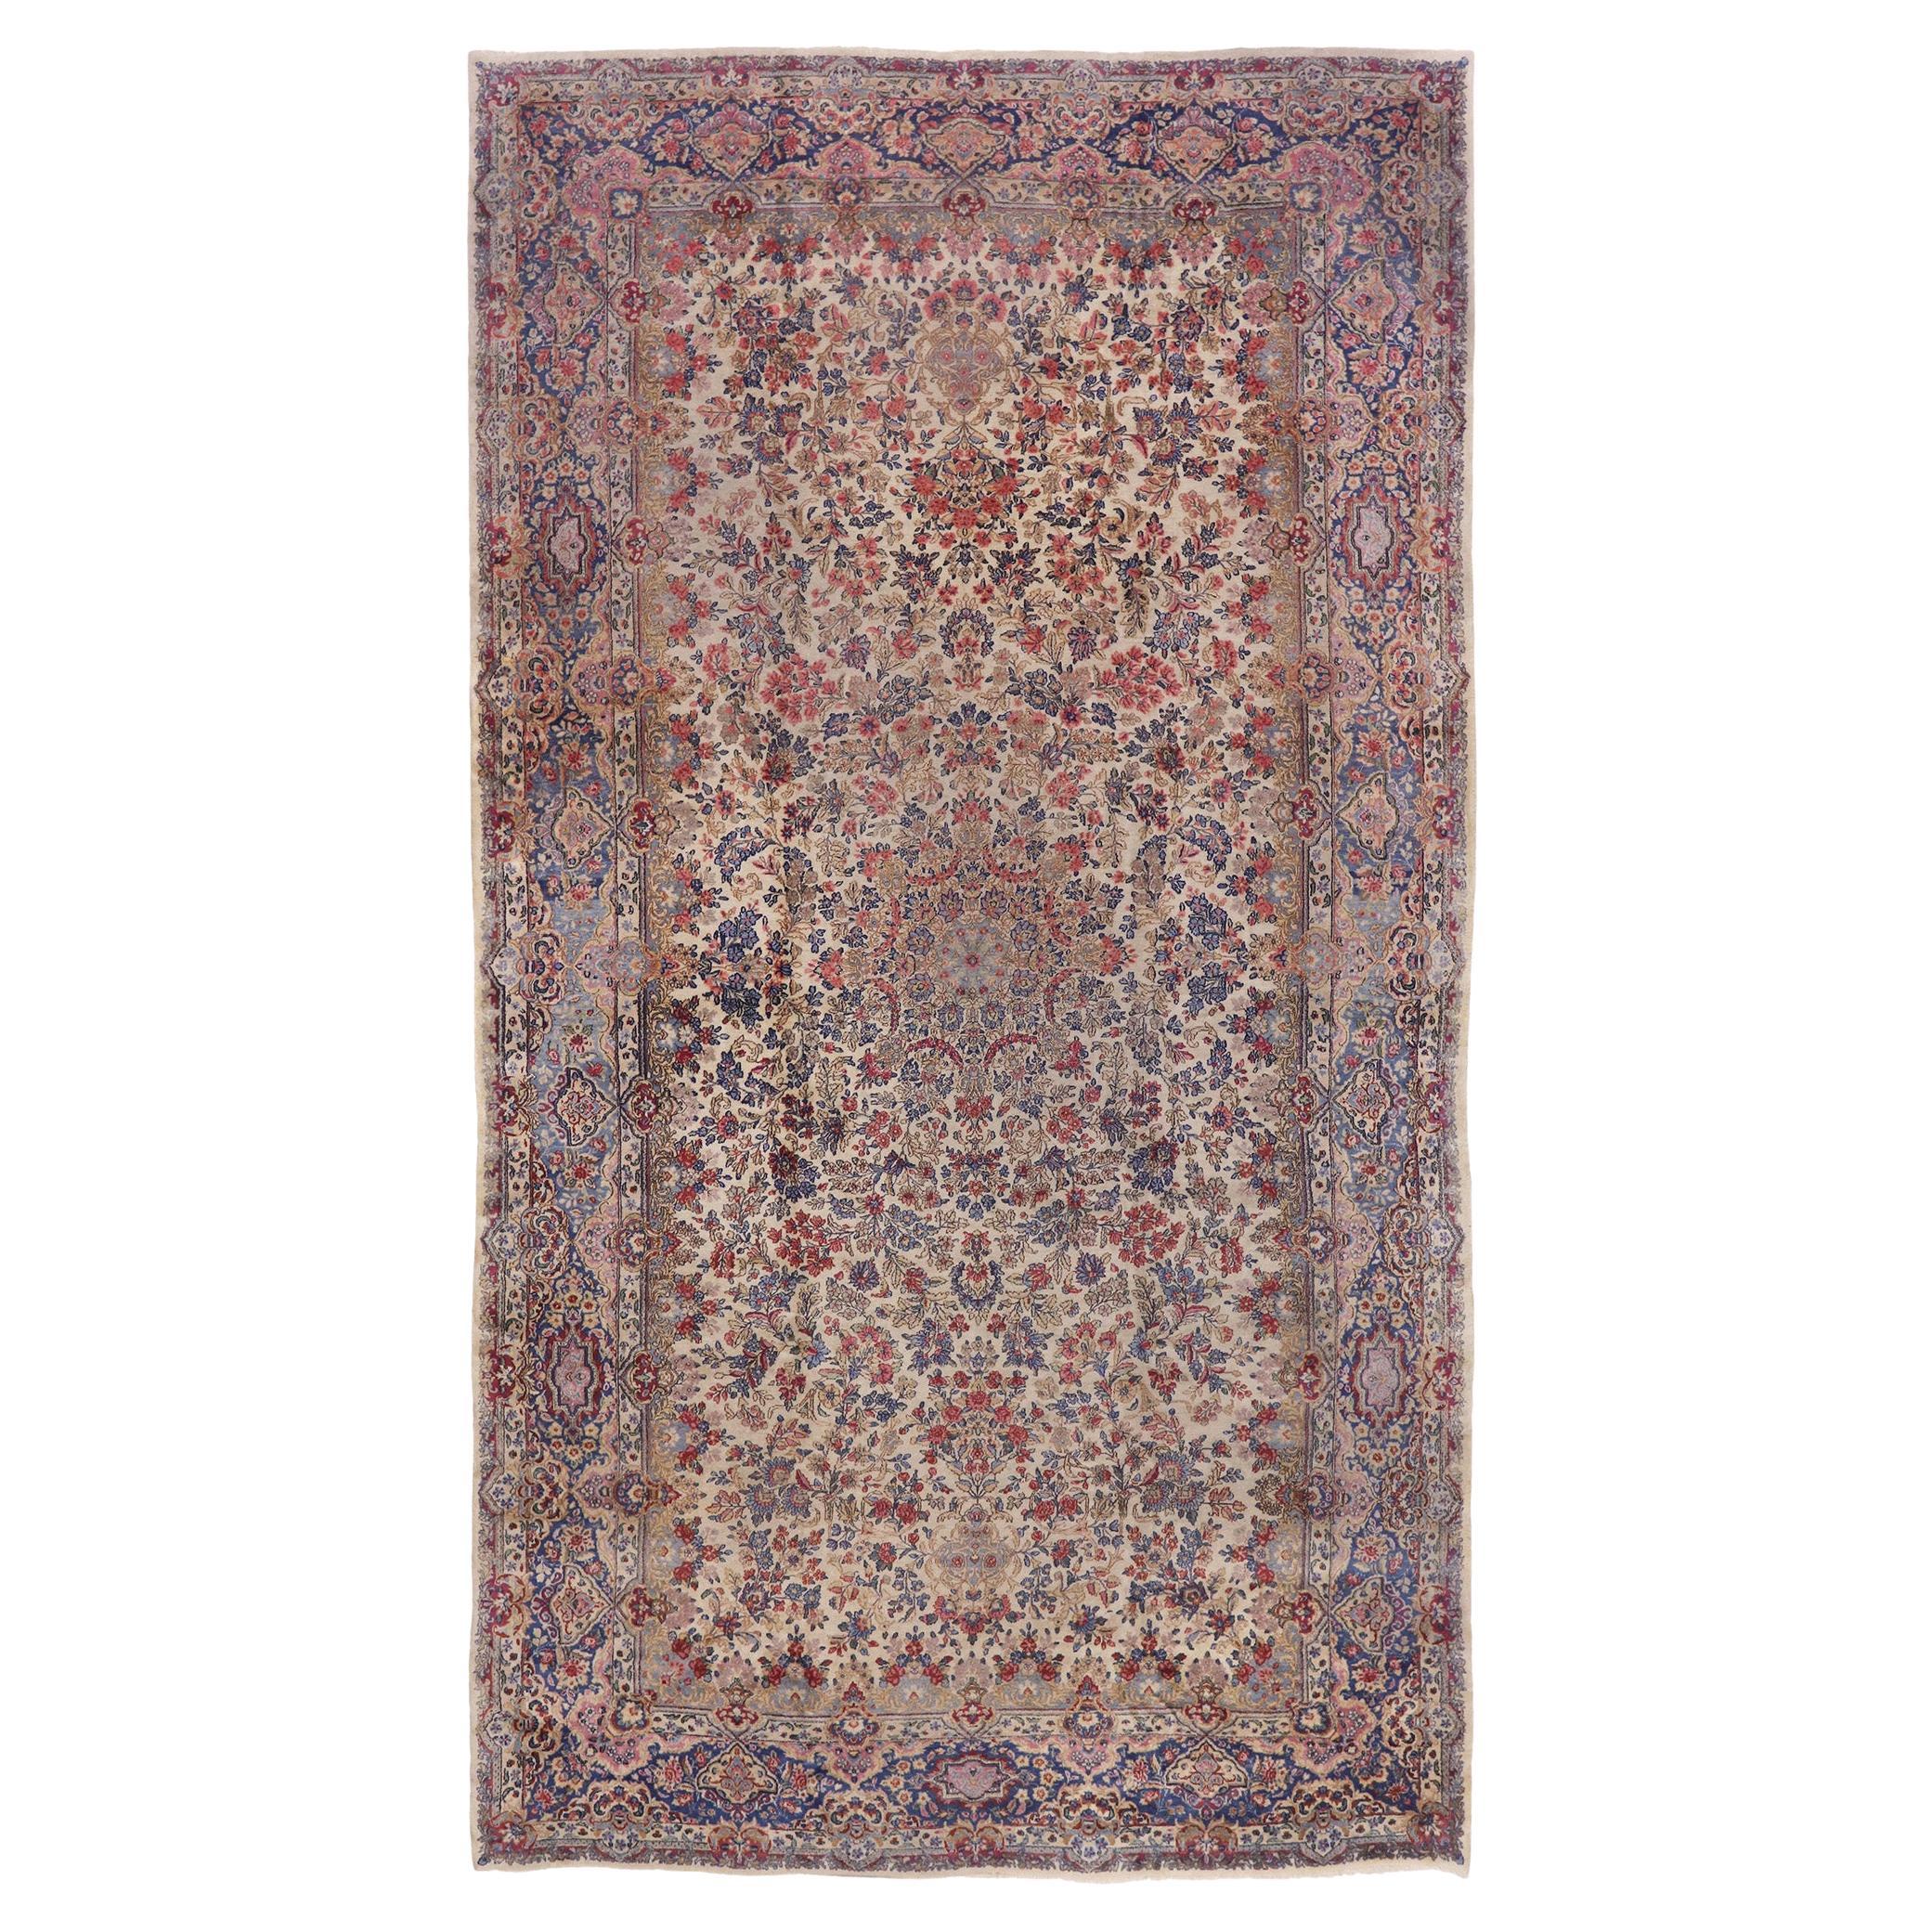 Antique Persian Kerman Rug, 09'07 x 17'06 For Sale